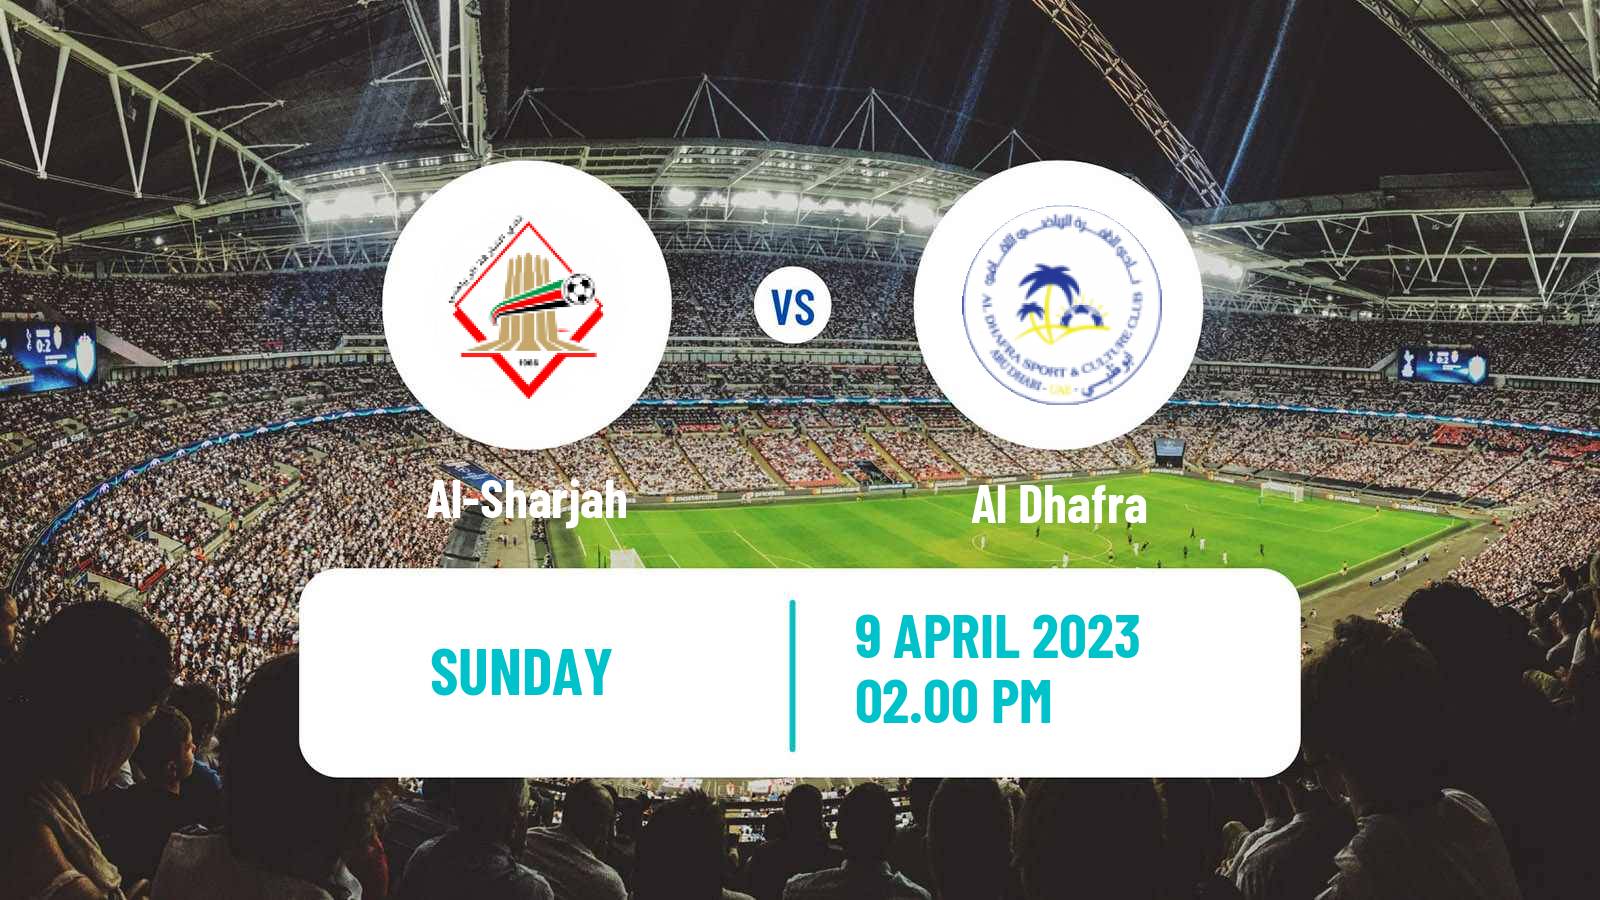 Soccer UAE Football League Al-Sharjah - Al Dhafra